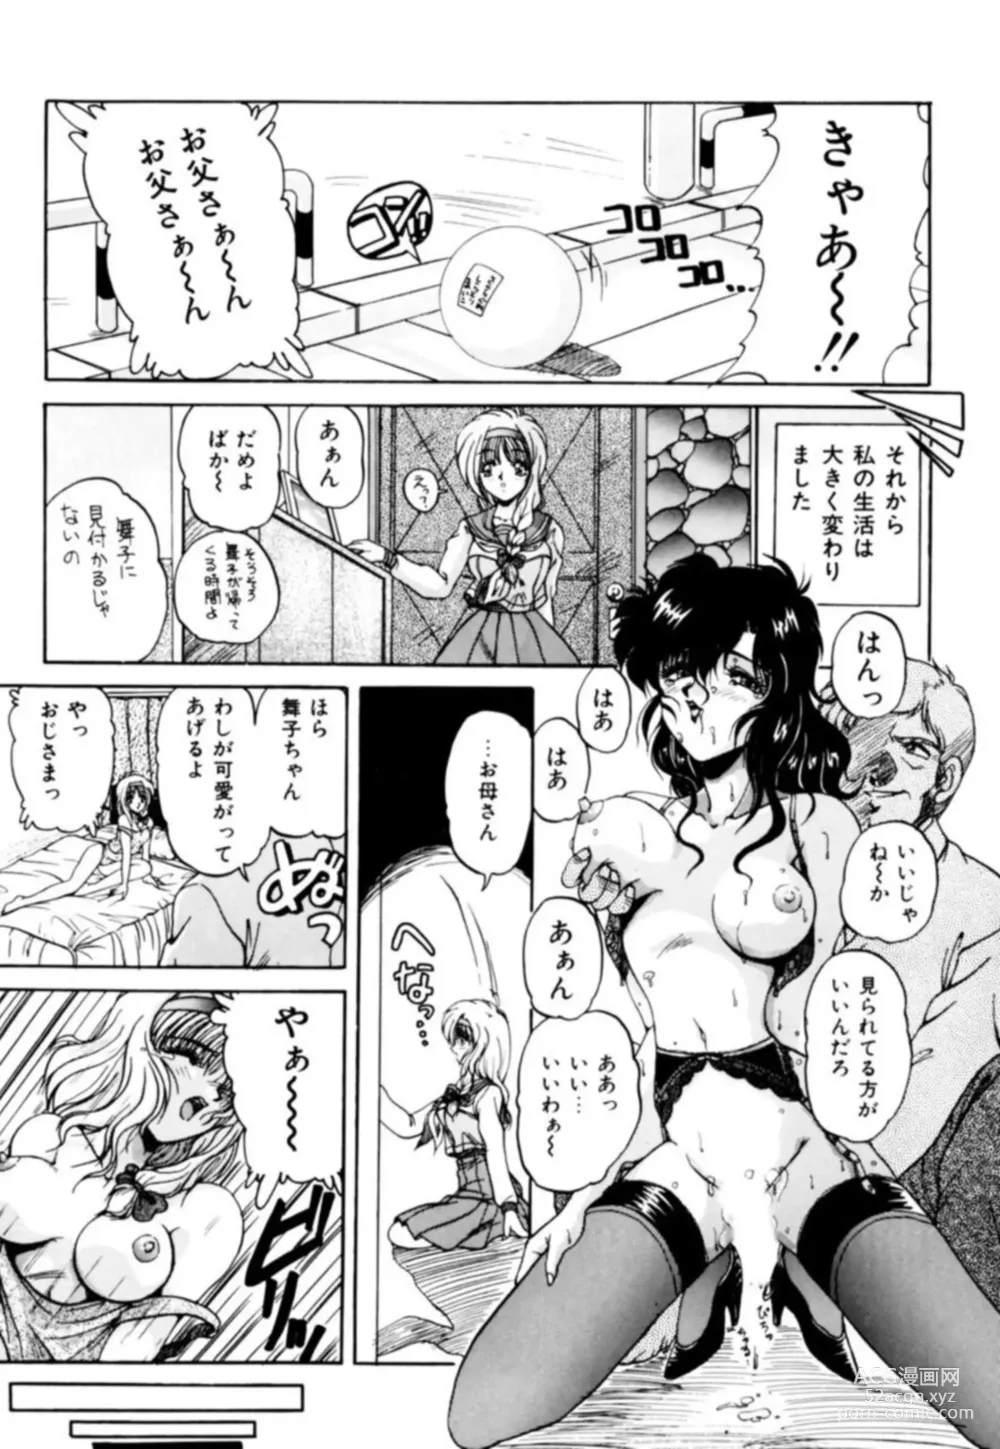 Page 7 of manga Fu Antomu Korekushon 1